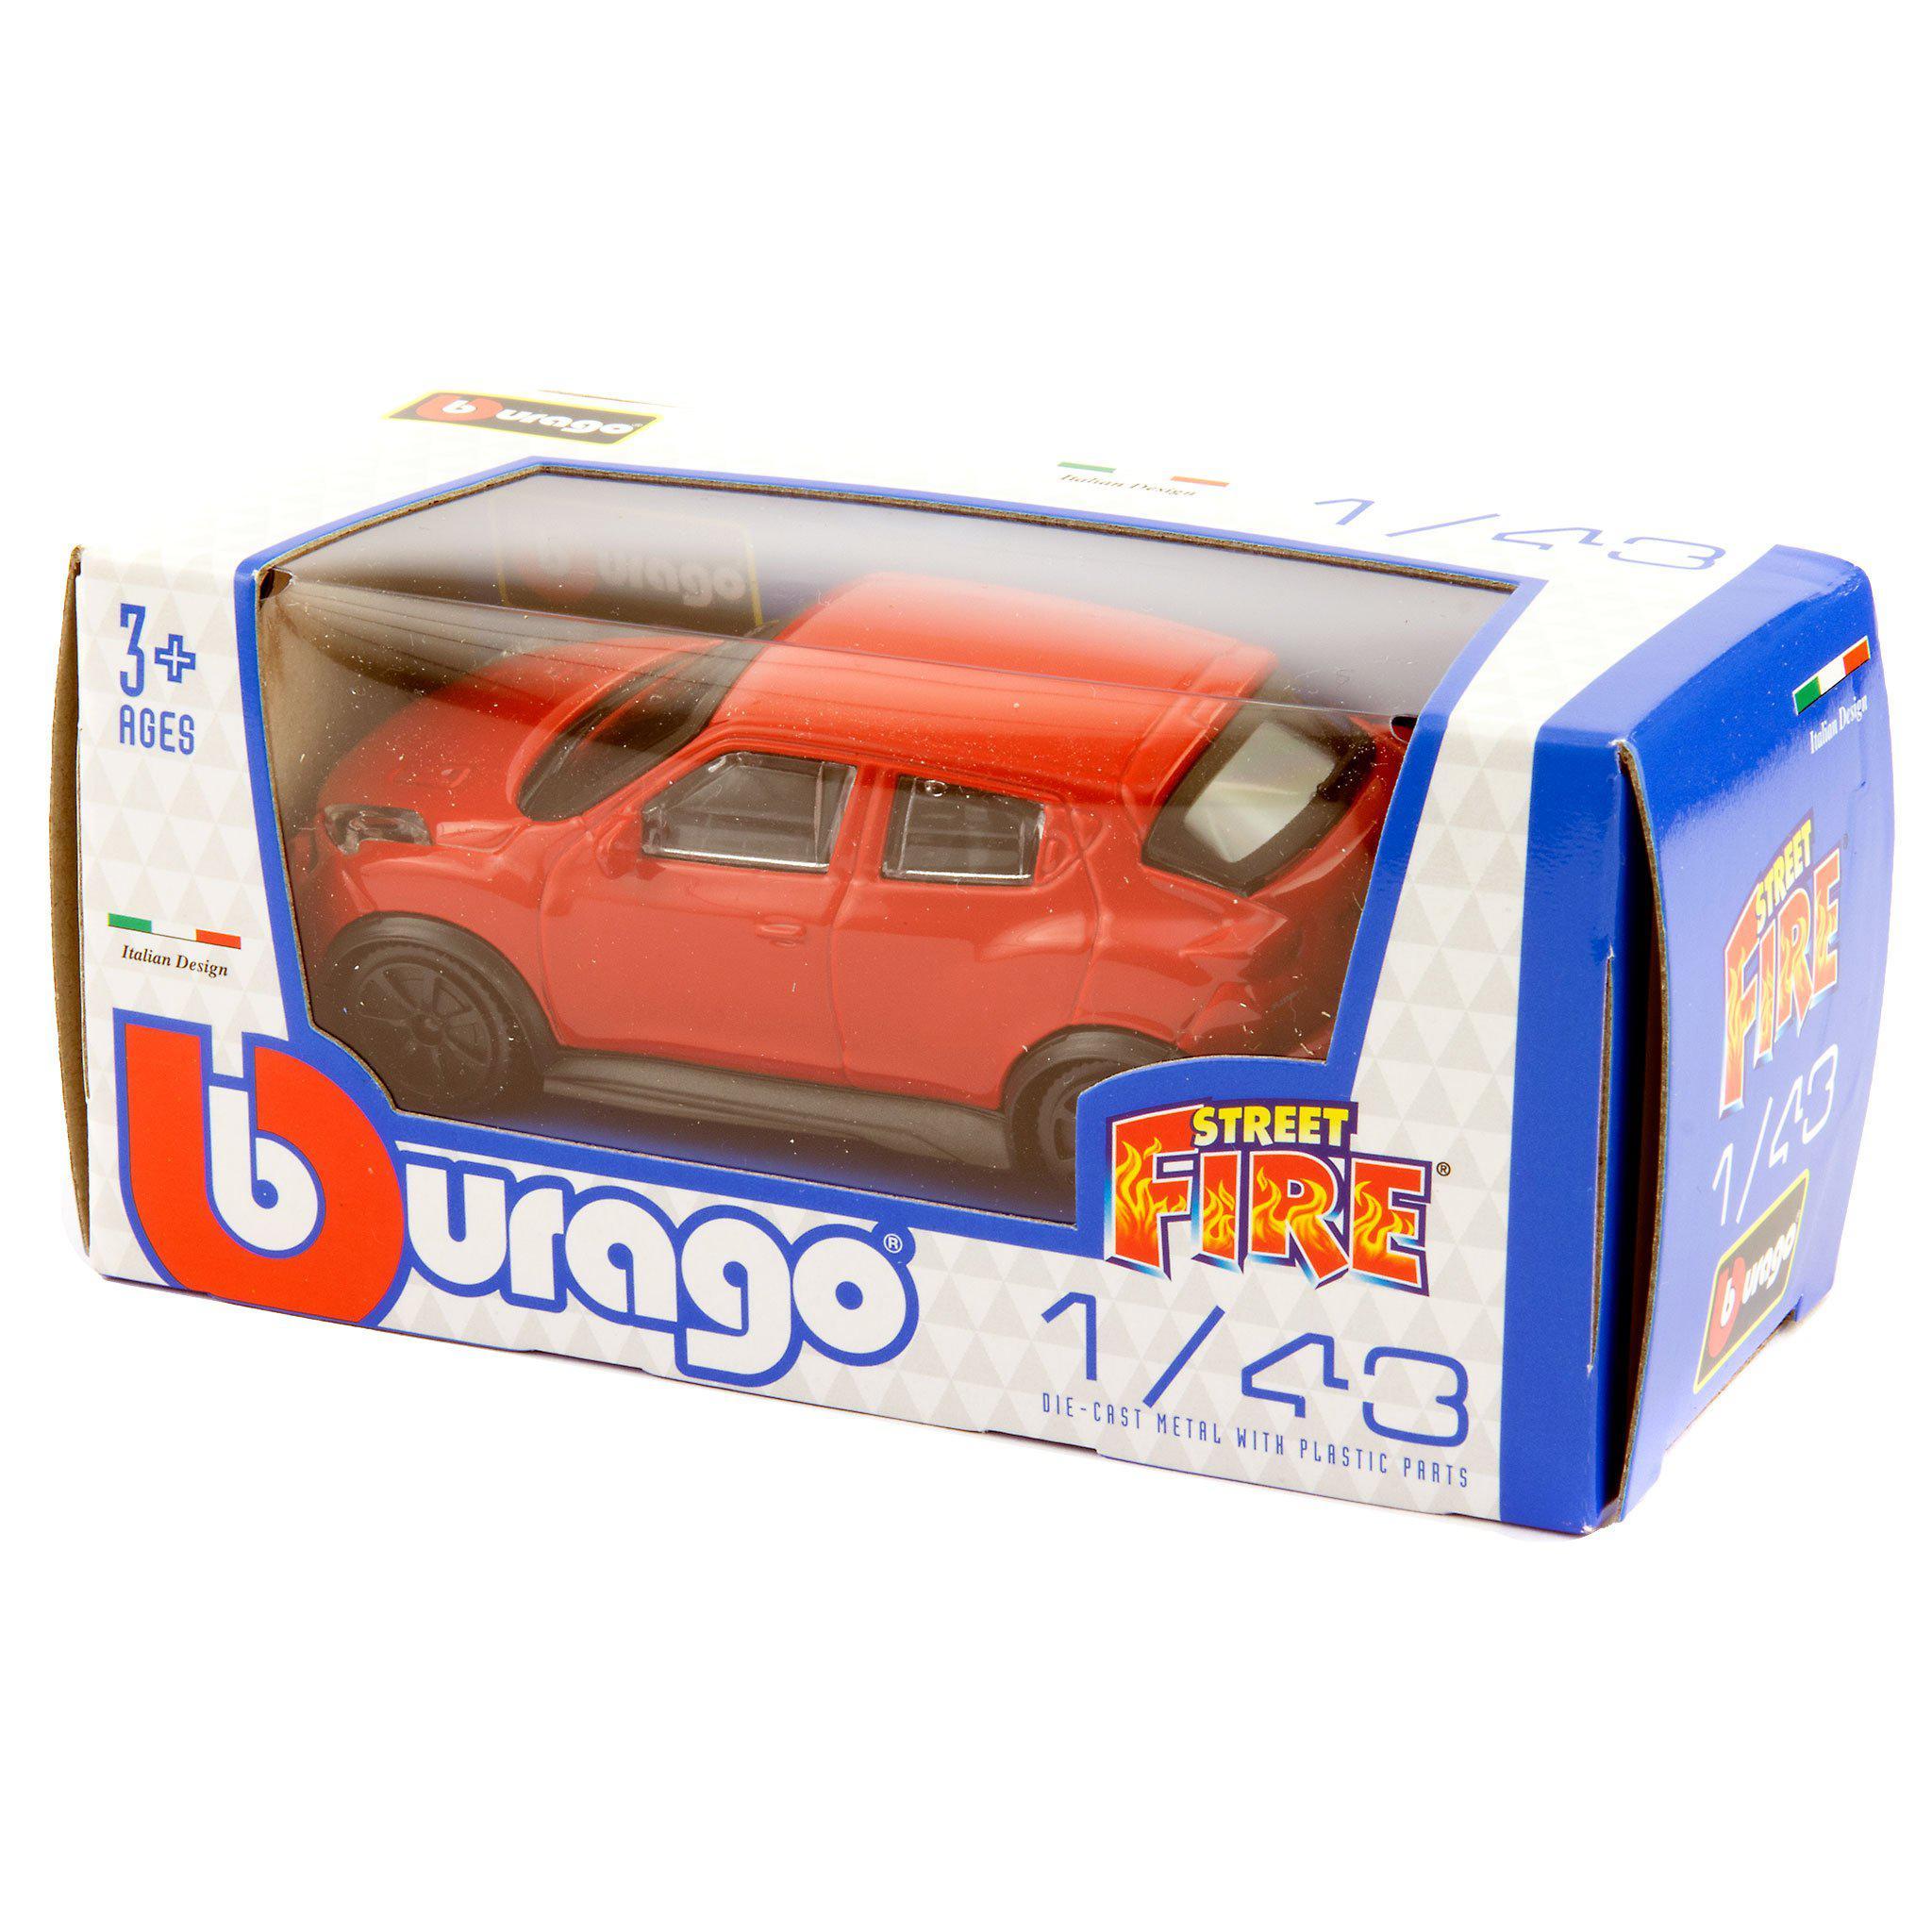 Nissan Juke R Diecast Toy Car red - 1:43 Scale-Bburago-Diecast Model Centre